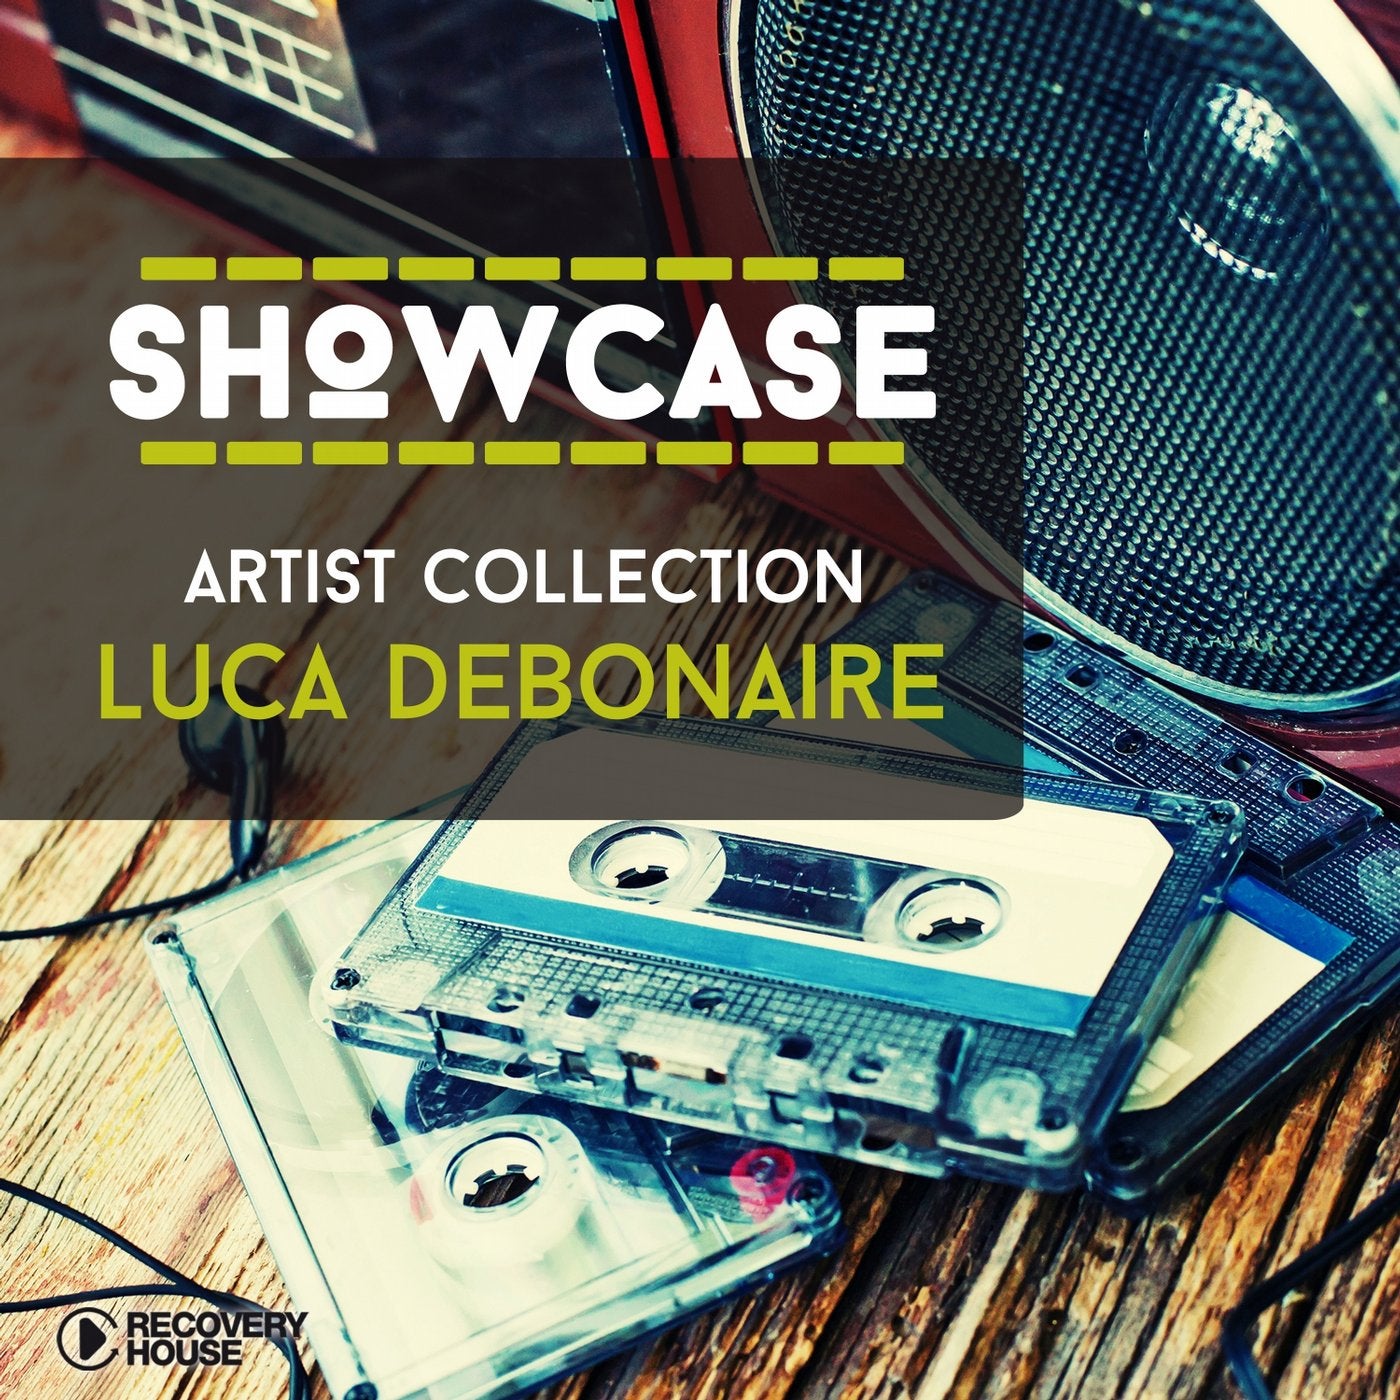 Showcase - Artist Collection Luca Debonaire